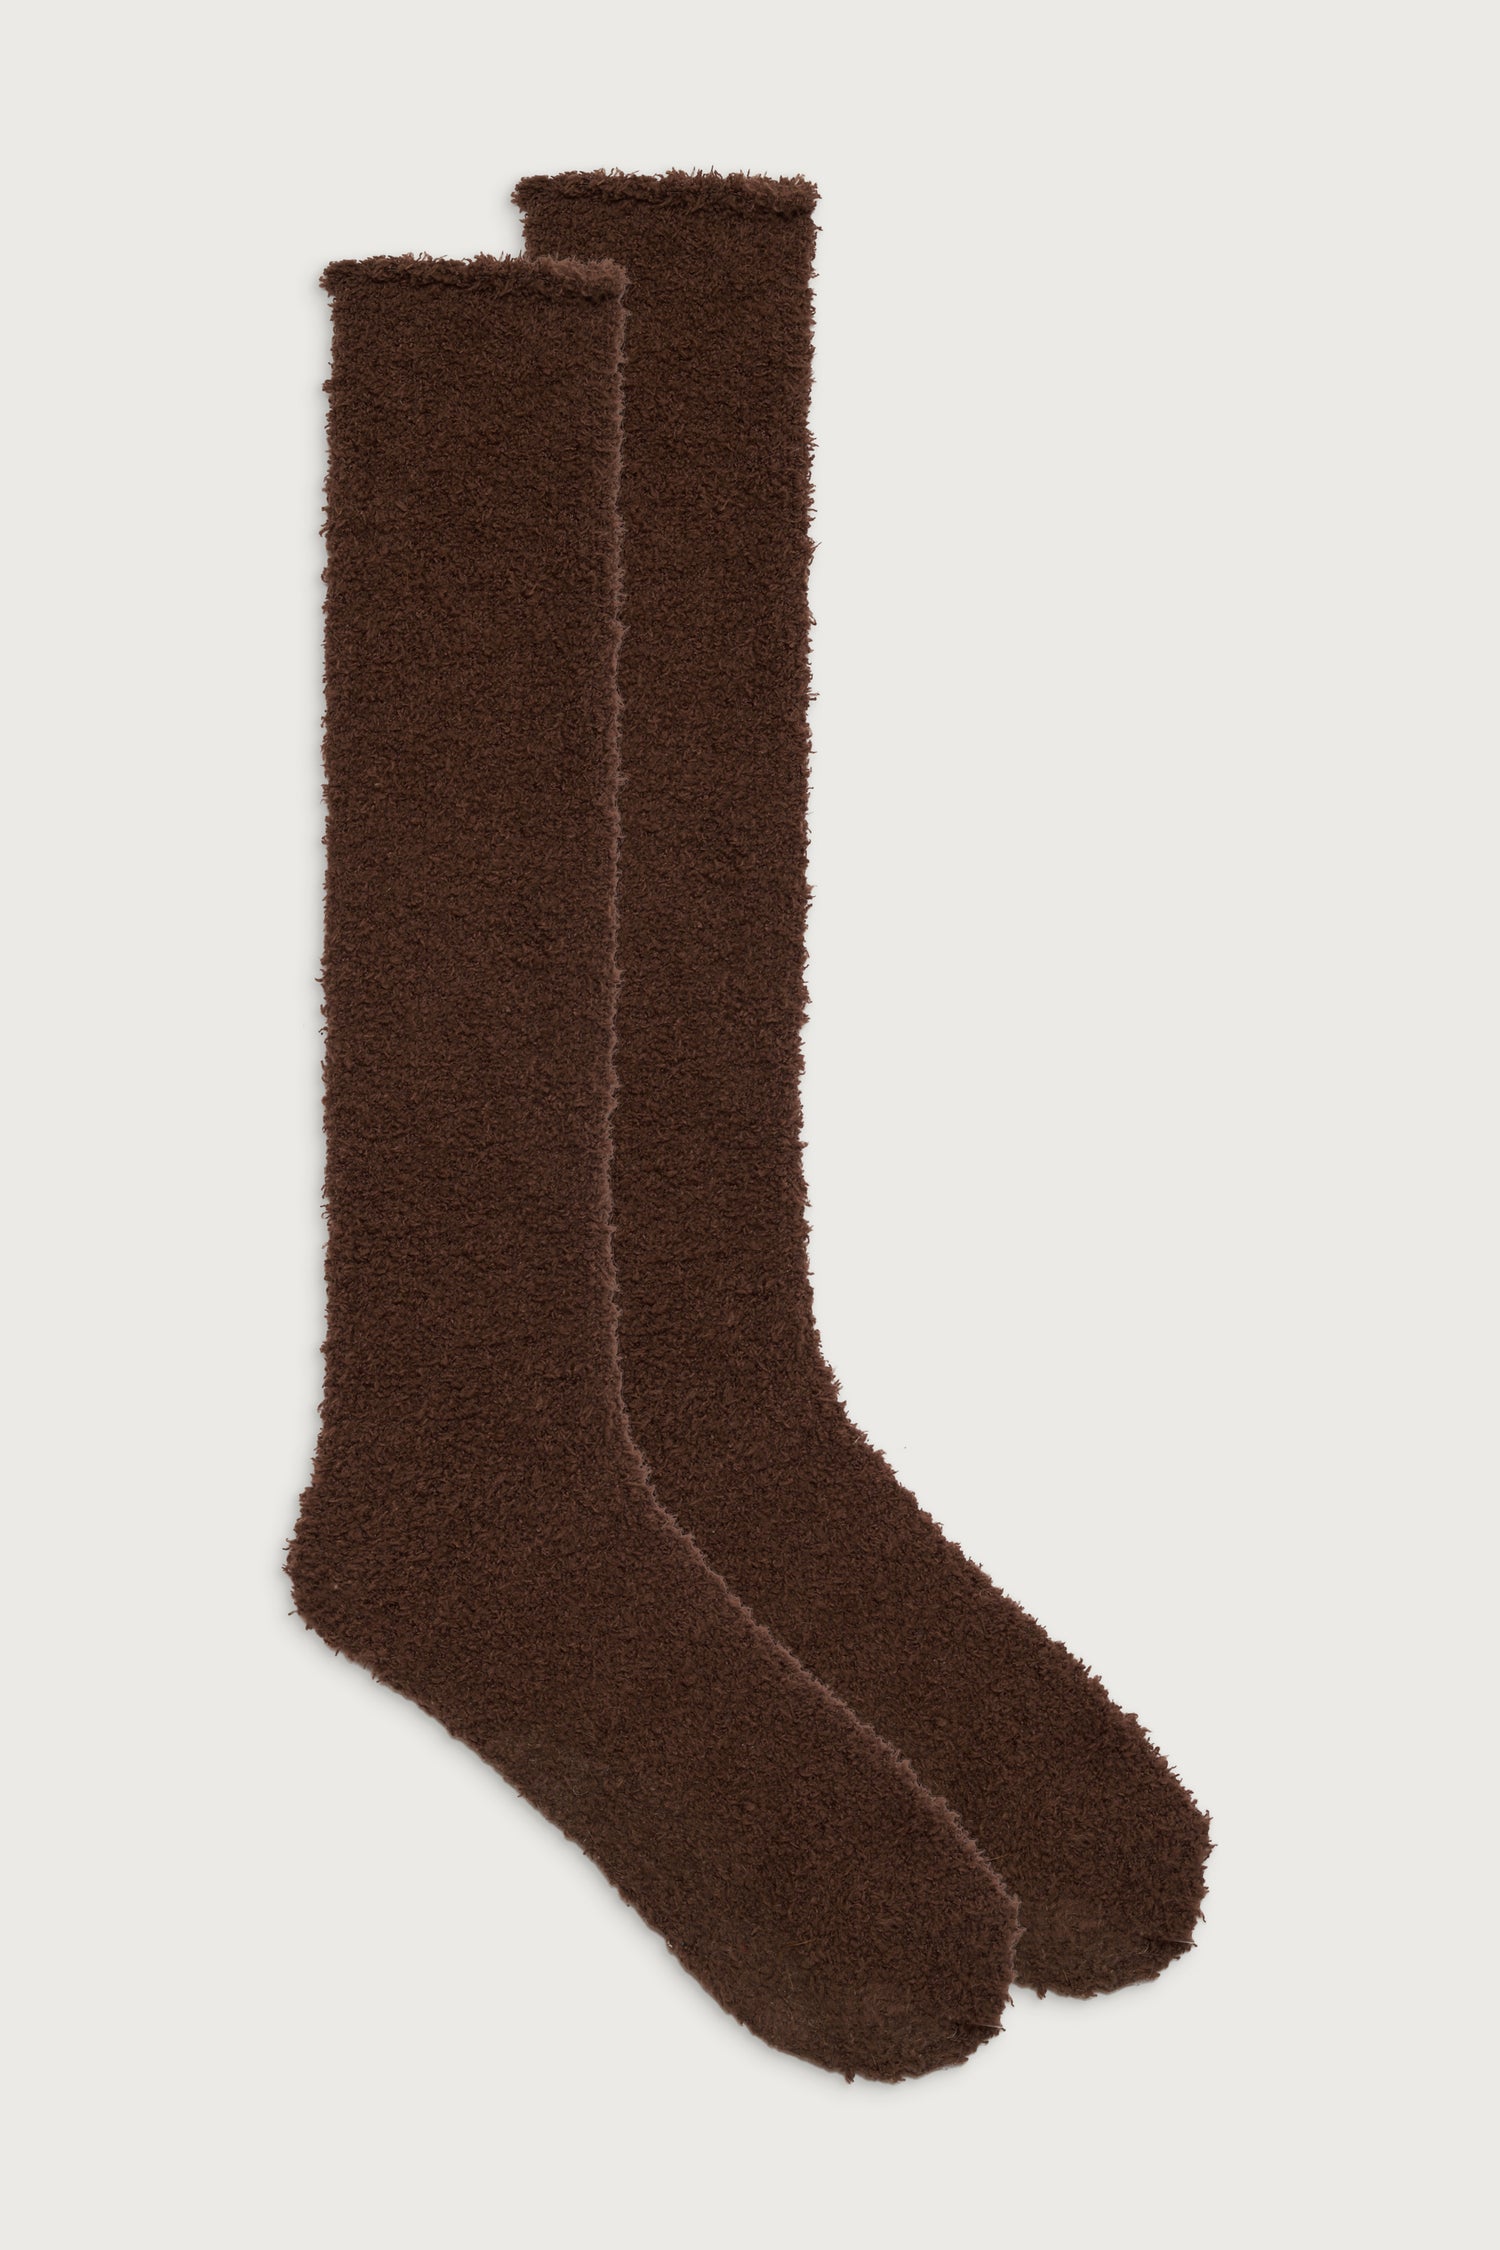 Cuddle Fuzzy High Socks - Chocolate Lily